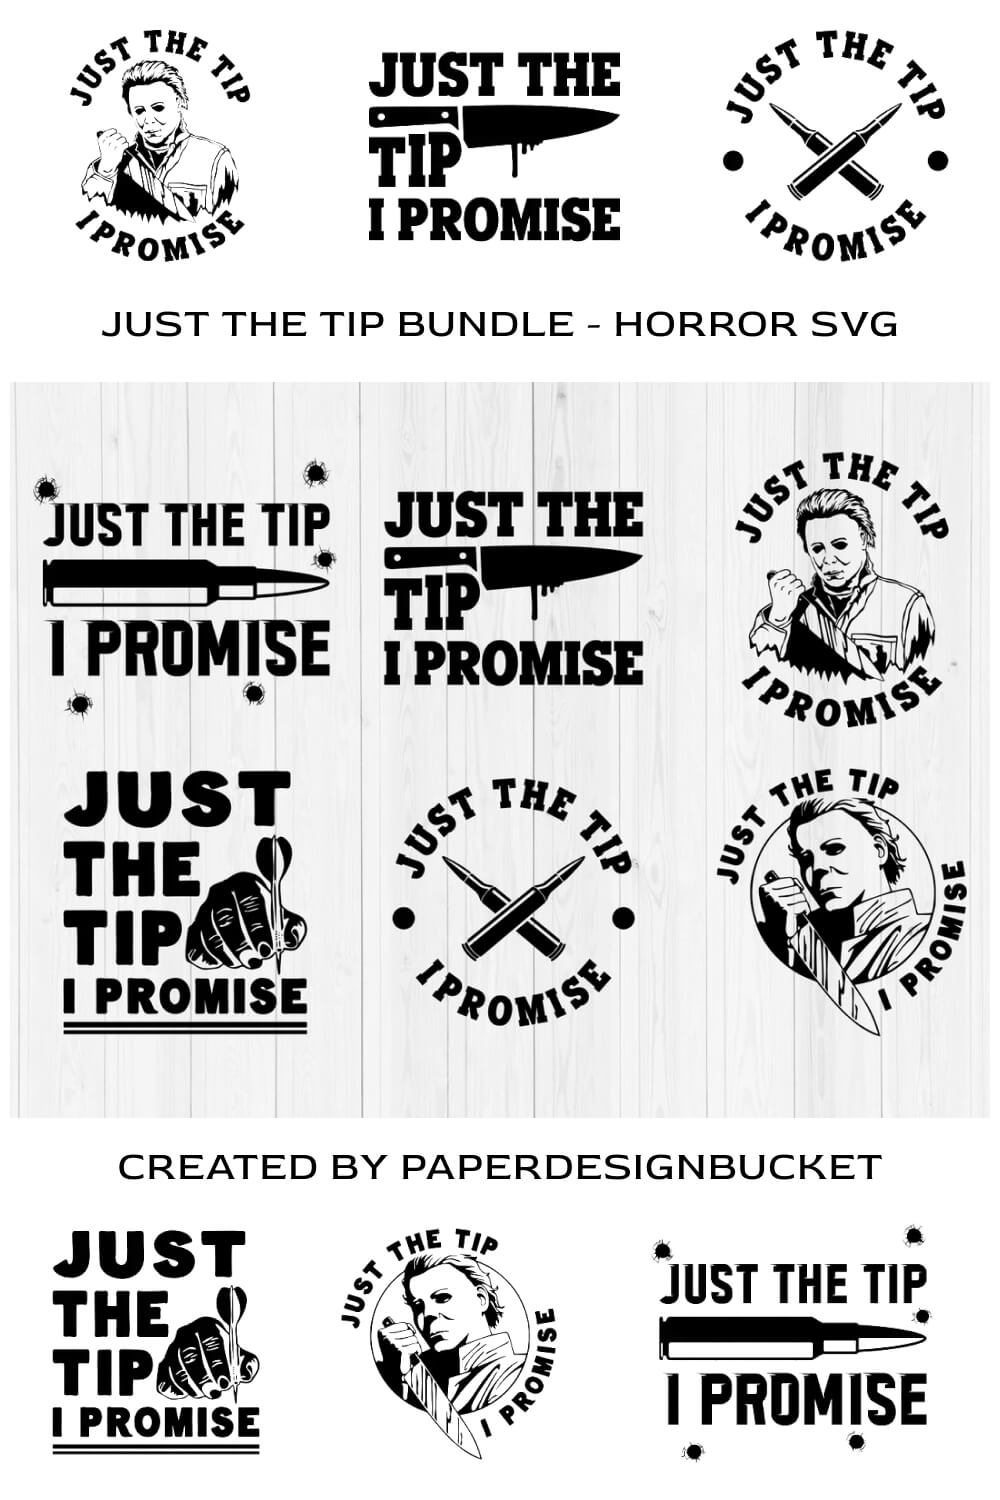 Just the Tip Bundle Horror SVG Created by Paperdesignbucket.